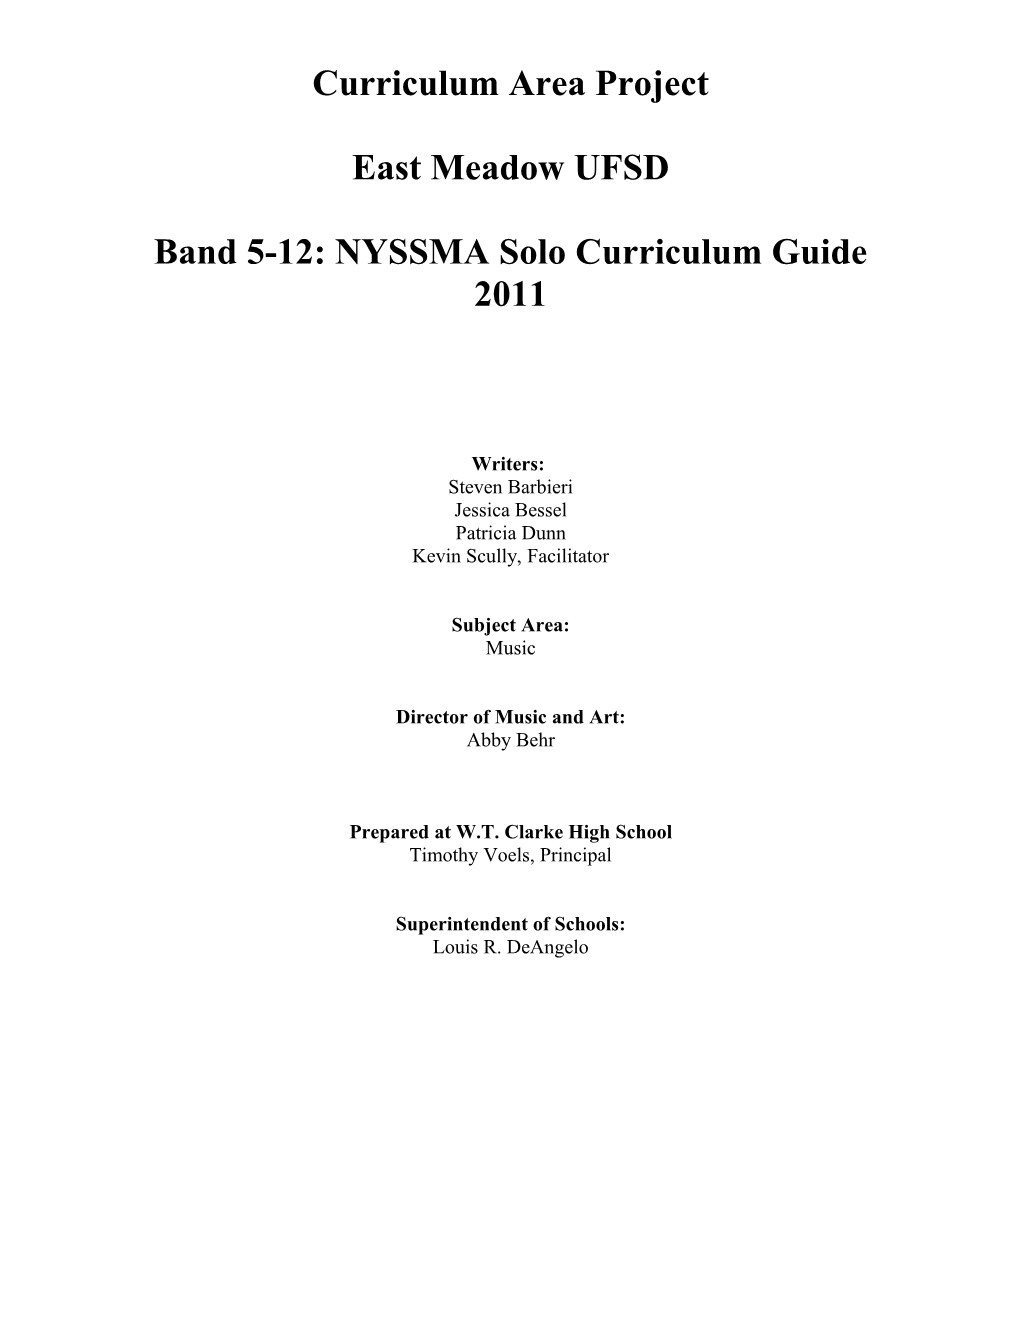 Band 5-12: NYSSMA Solo Curriculum Guide 2011